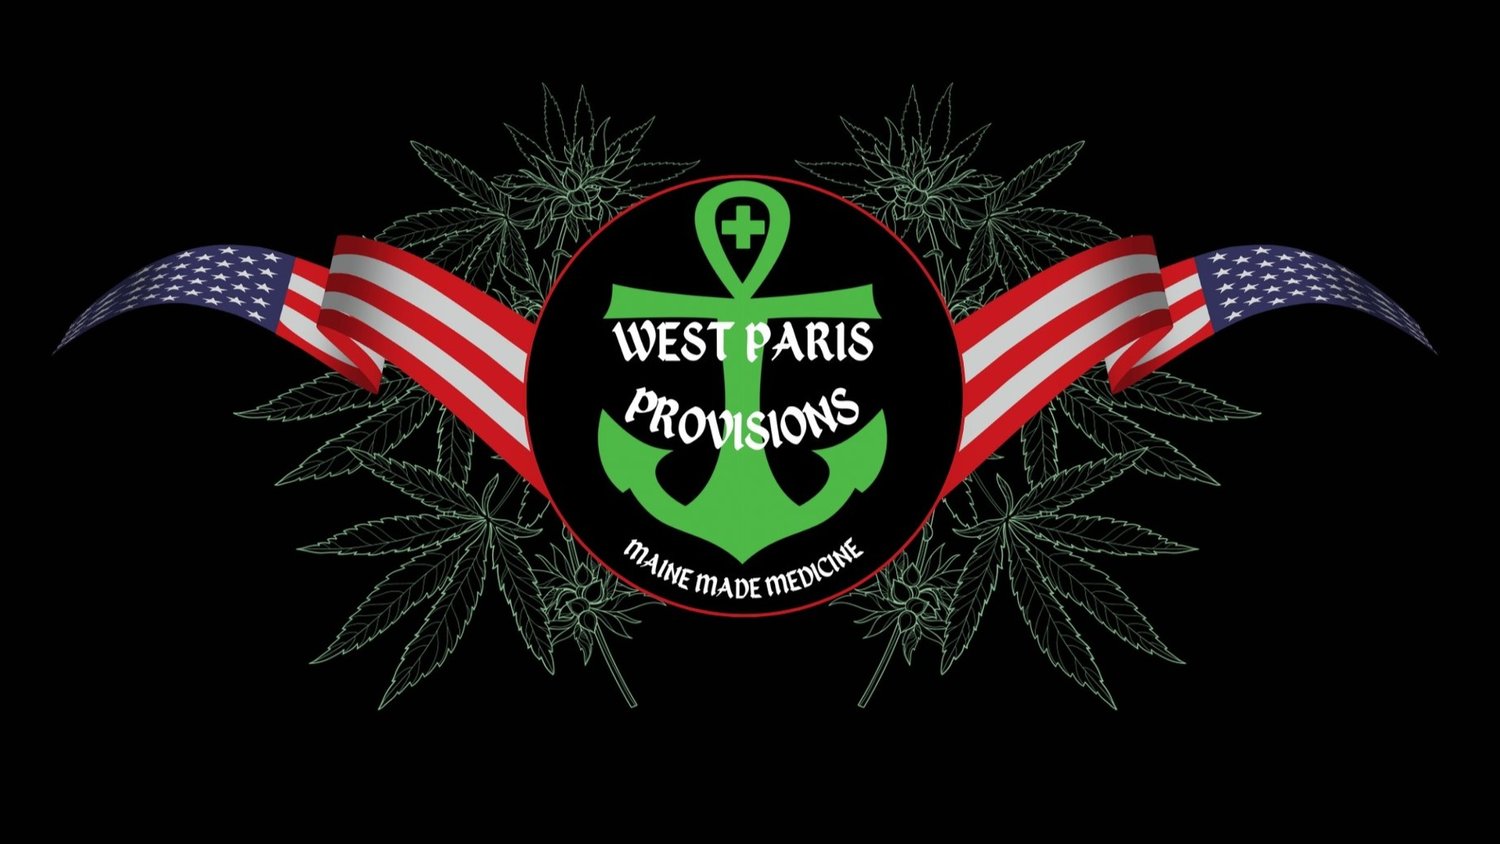 West Paris Provisions